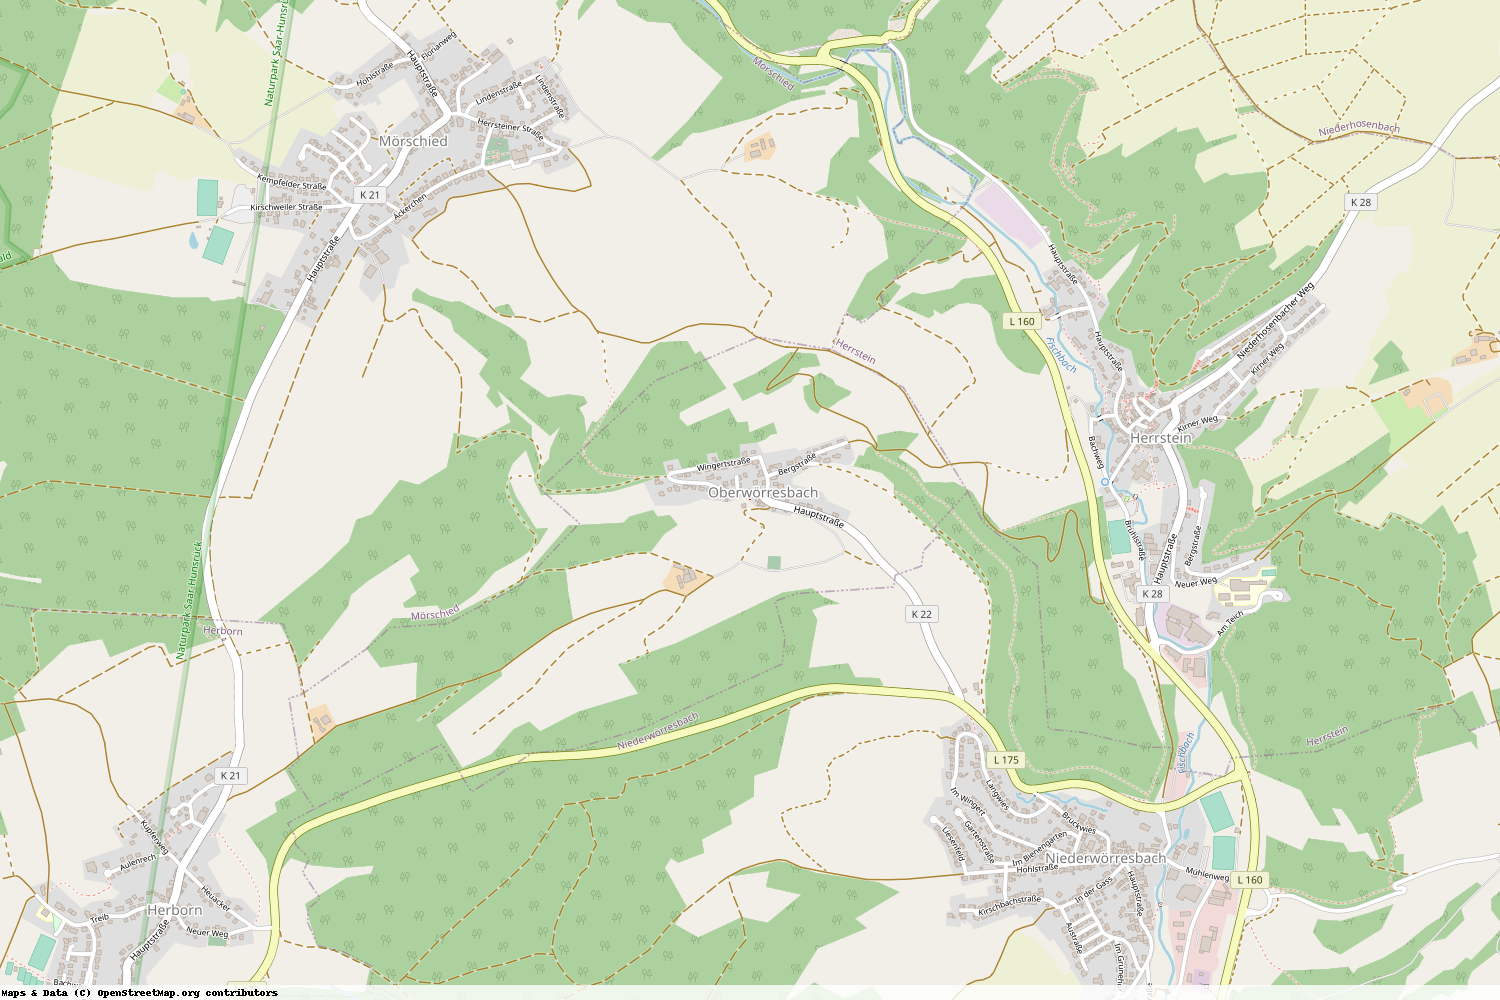 Ist gerade Stromausfall in Rheinland-Pfalz - Birkenfeld - Oberwörresbach?